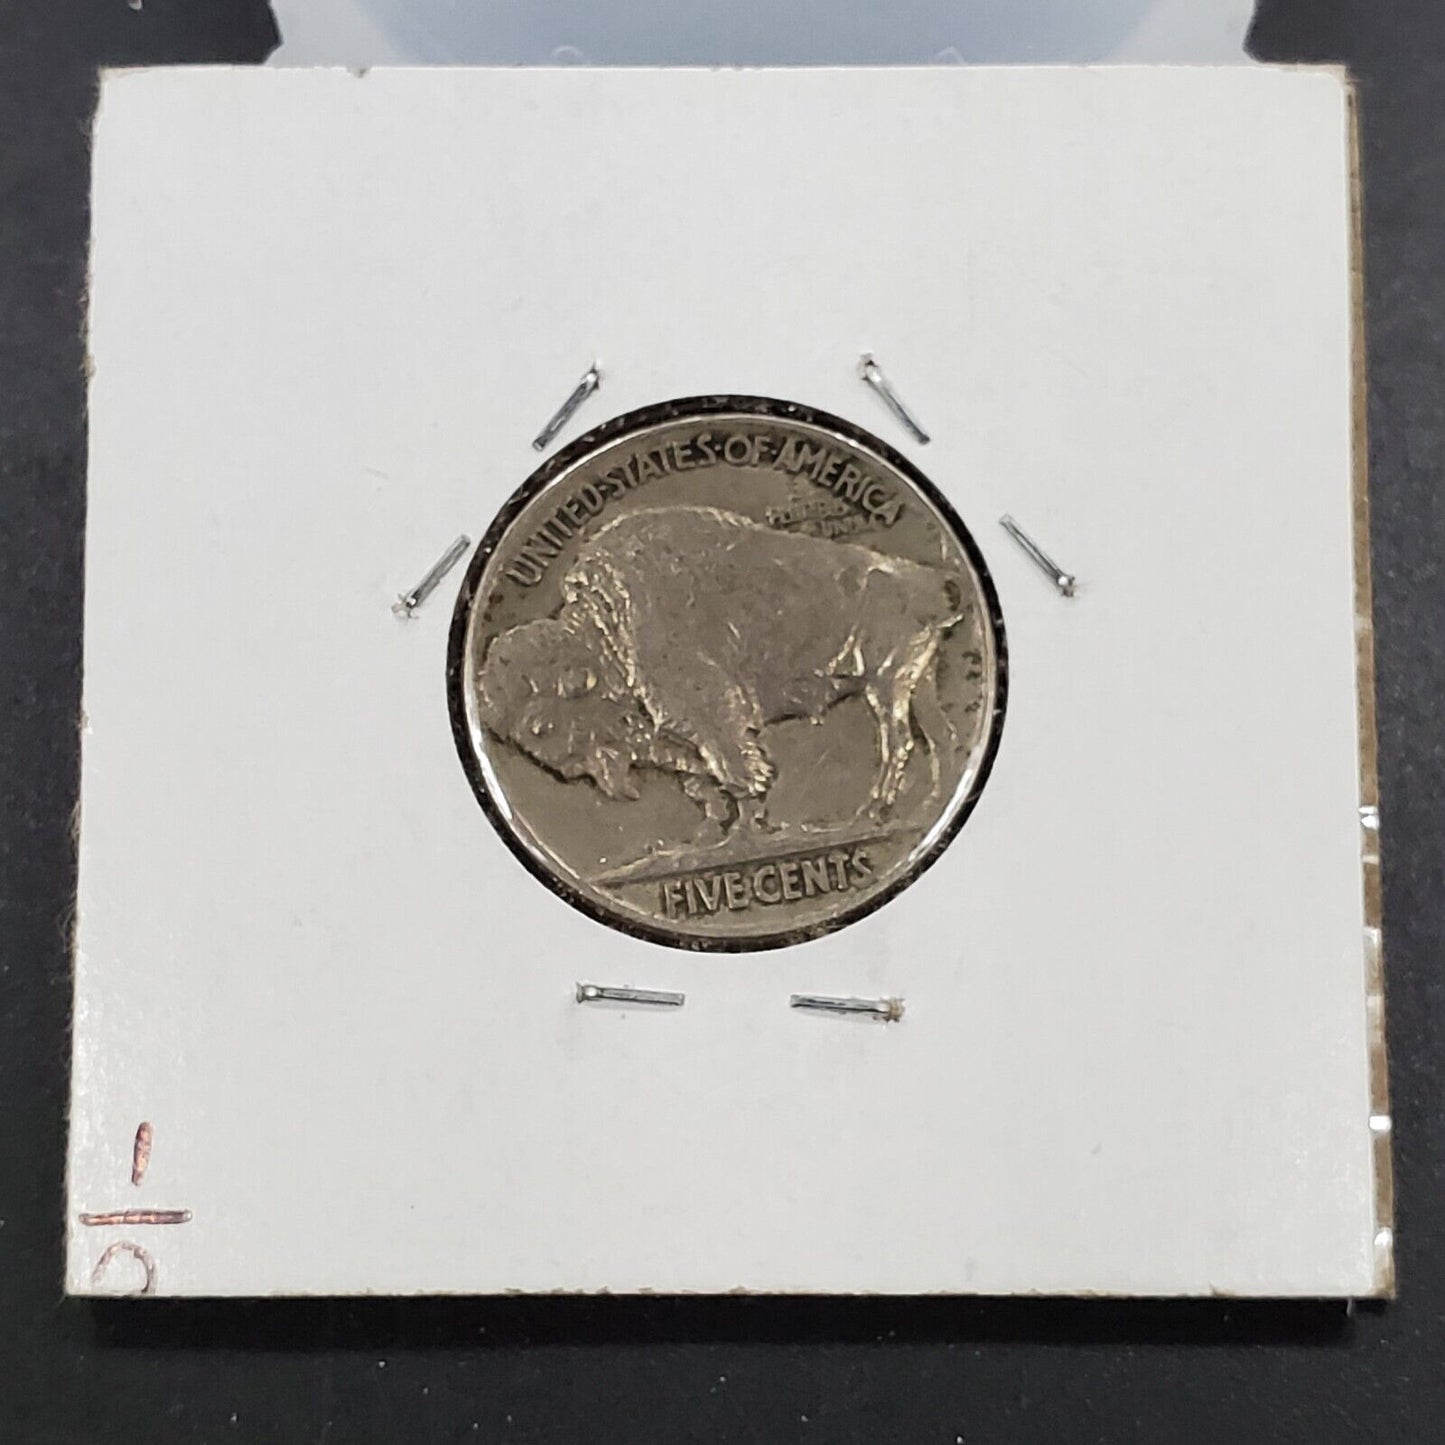 1934 5c Buffalo Indian Head Nickel Coin Choice Circulated VF VERY FINE